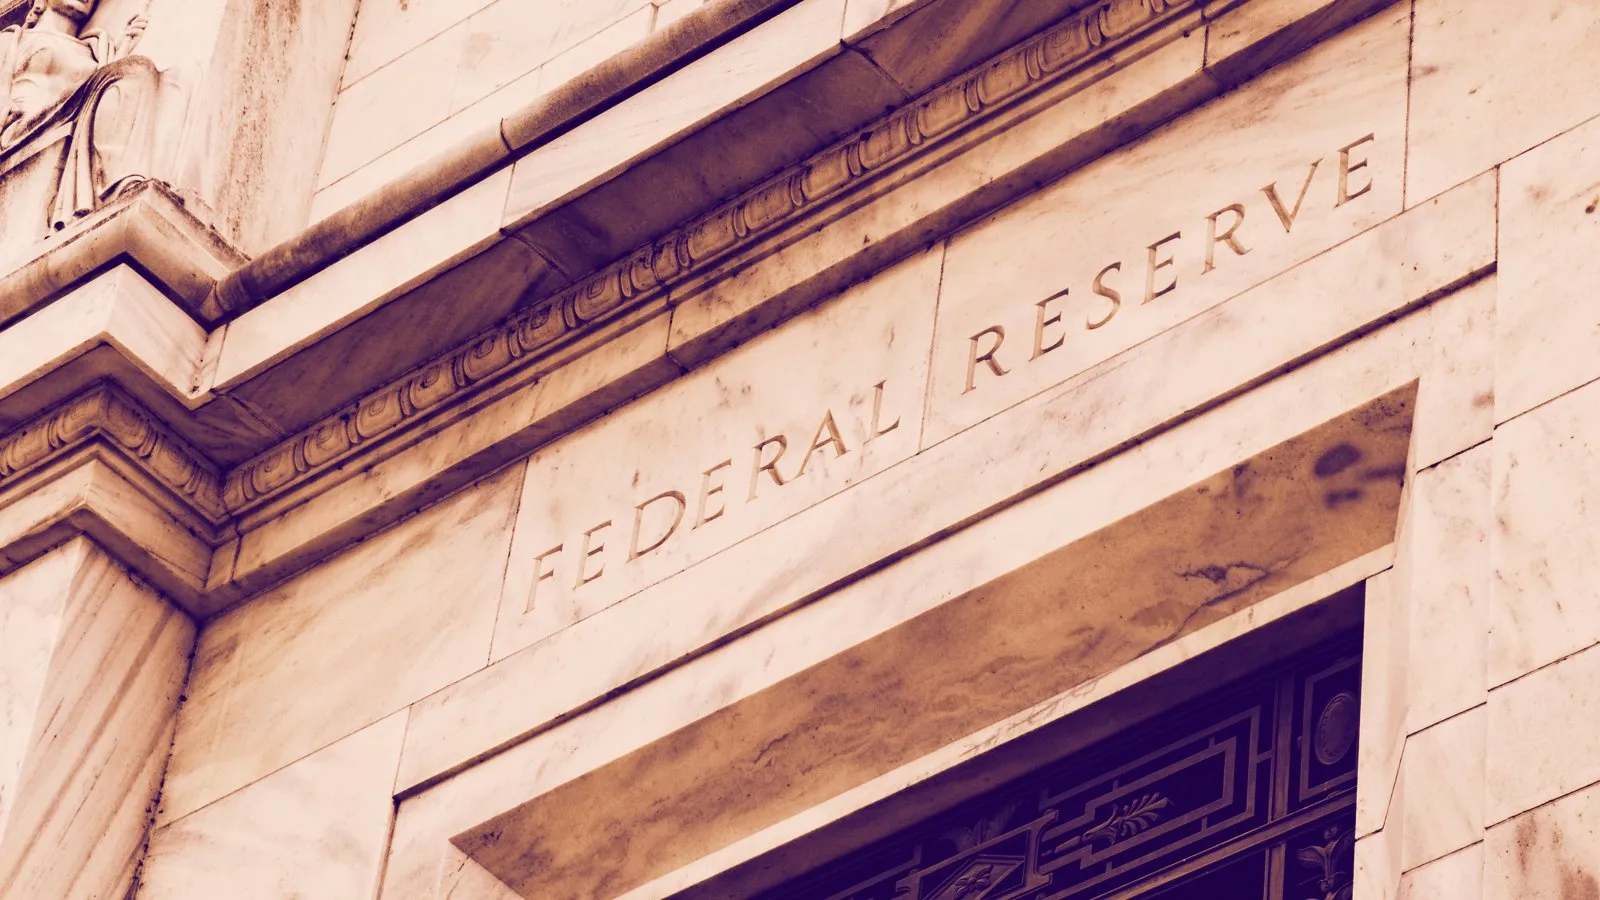 La Reserva Federal compra hasta 750.000 millones de dólares en ETFs. Imagen: Shutterstock